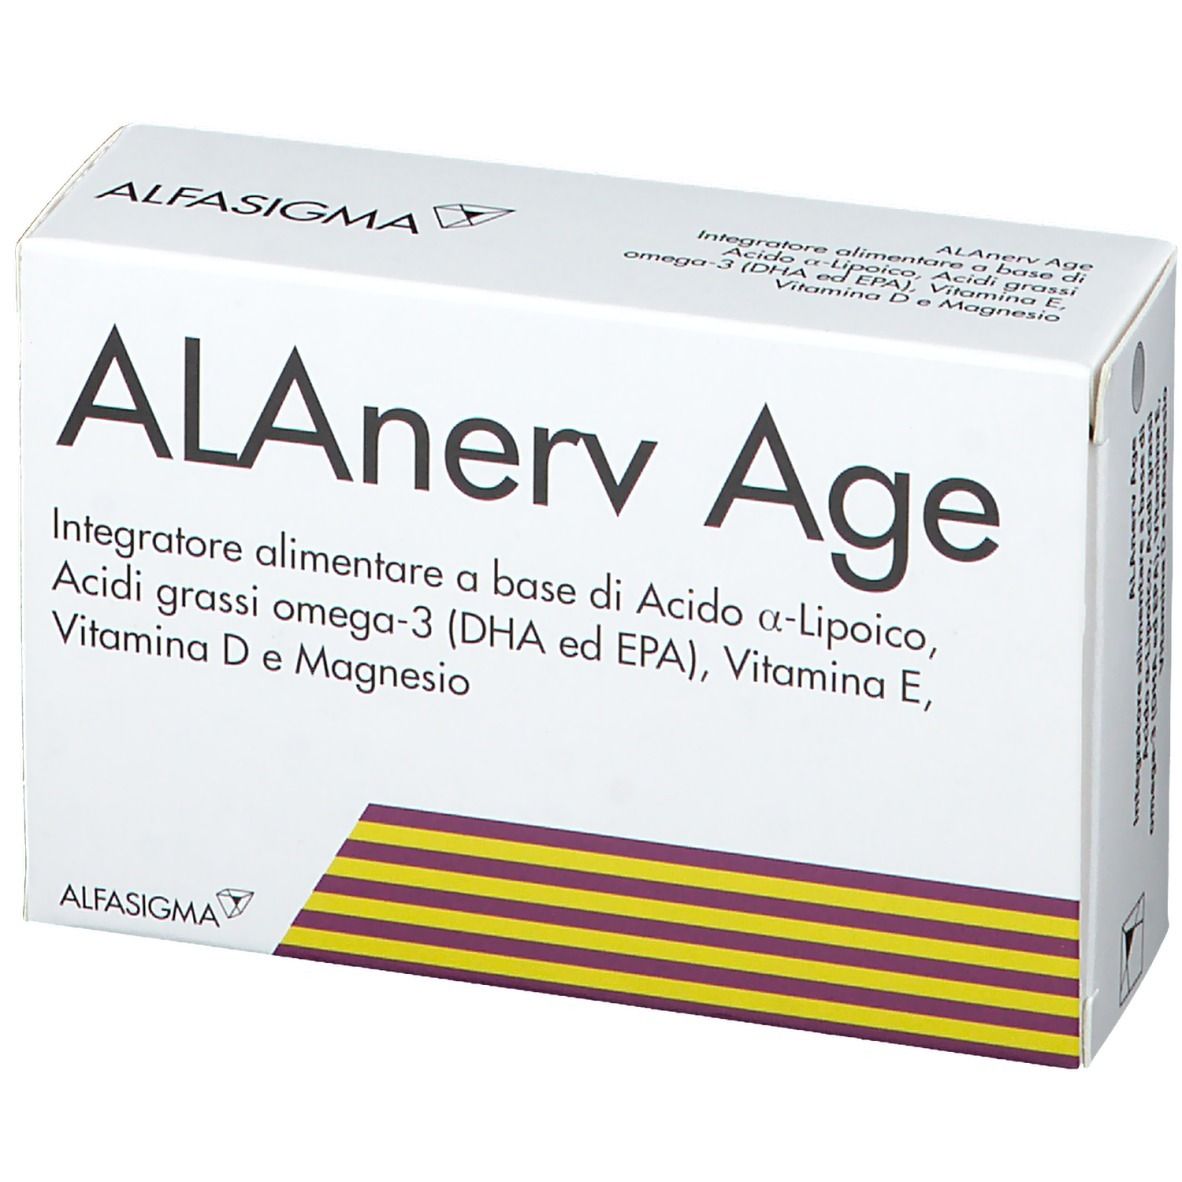 ALAnerv Age